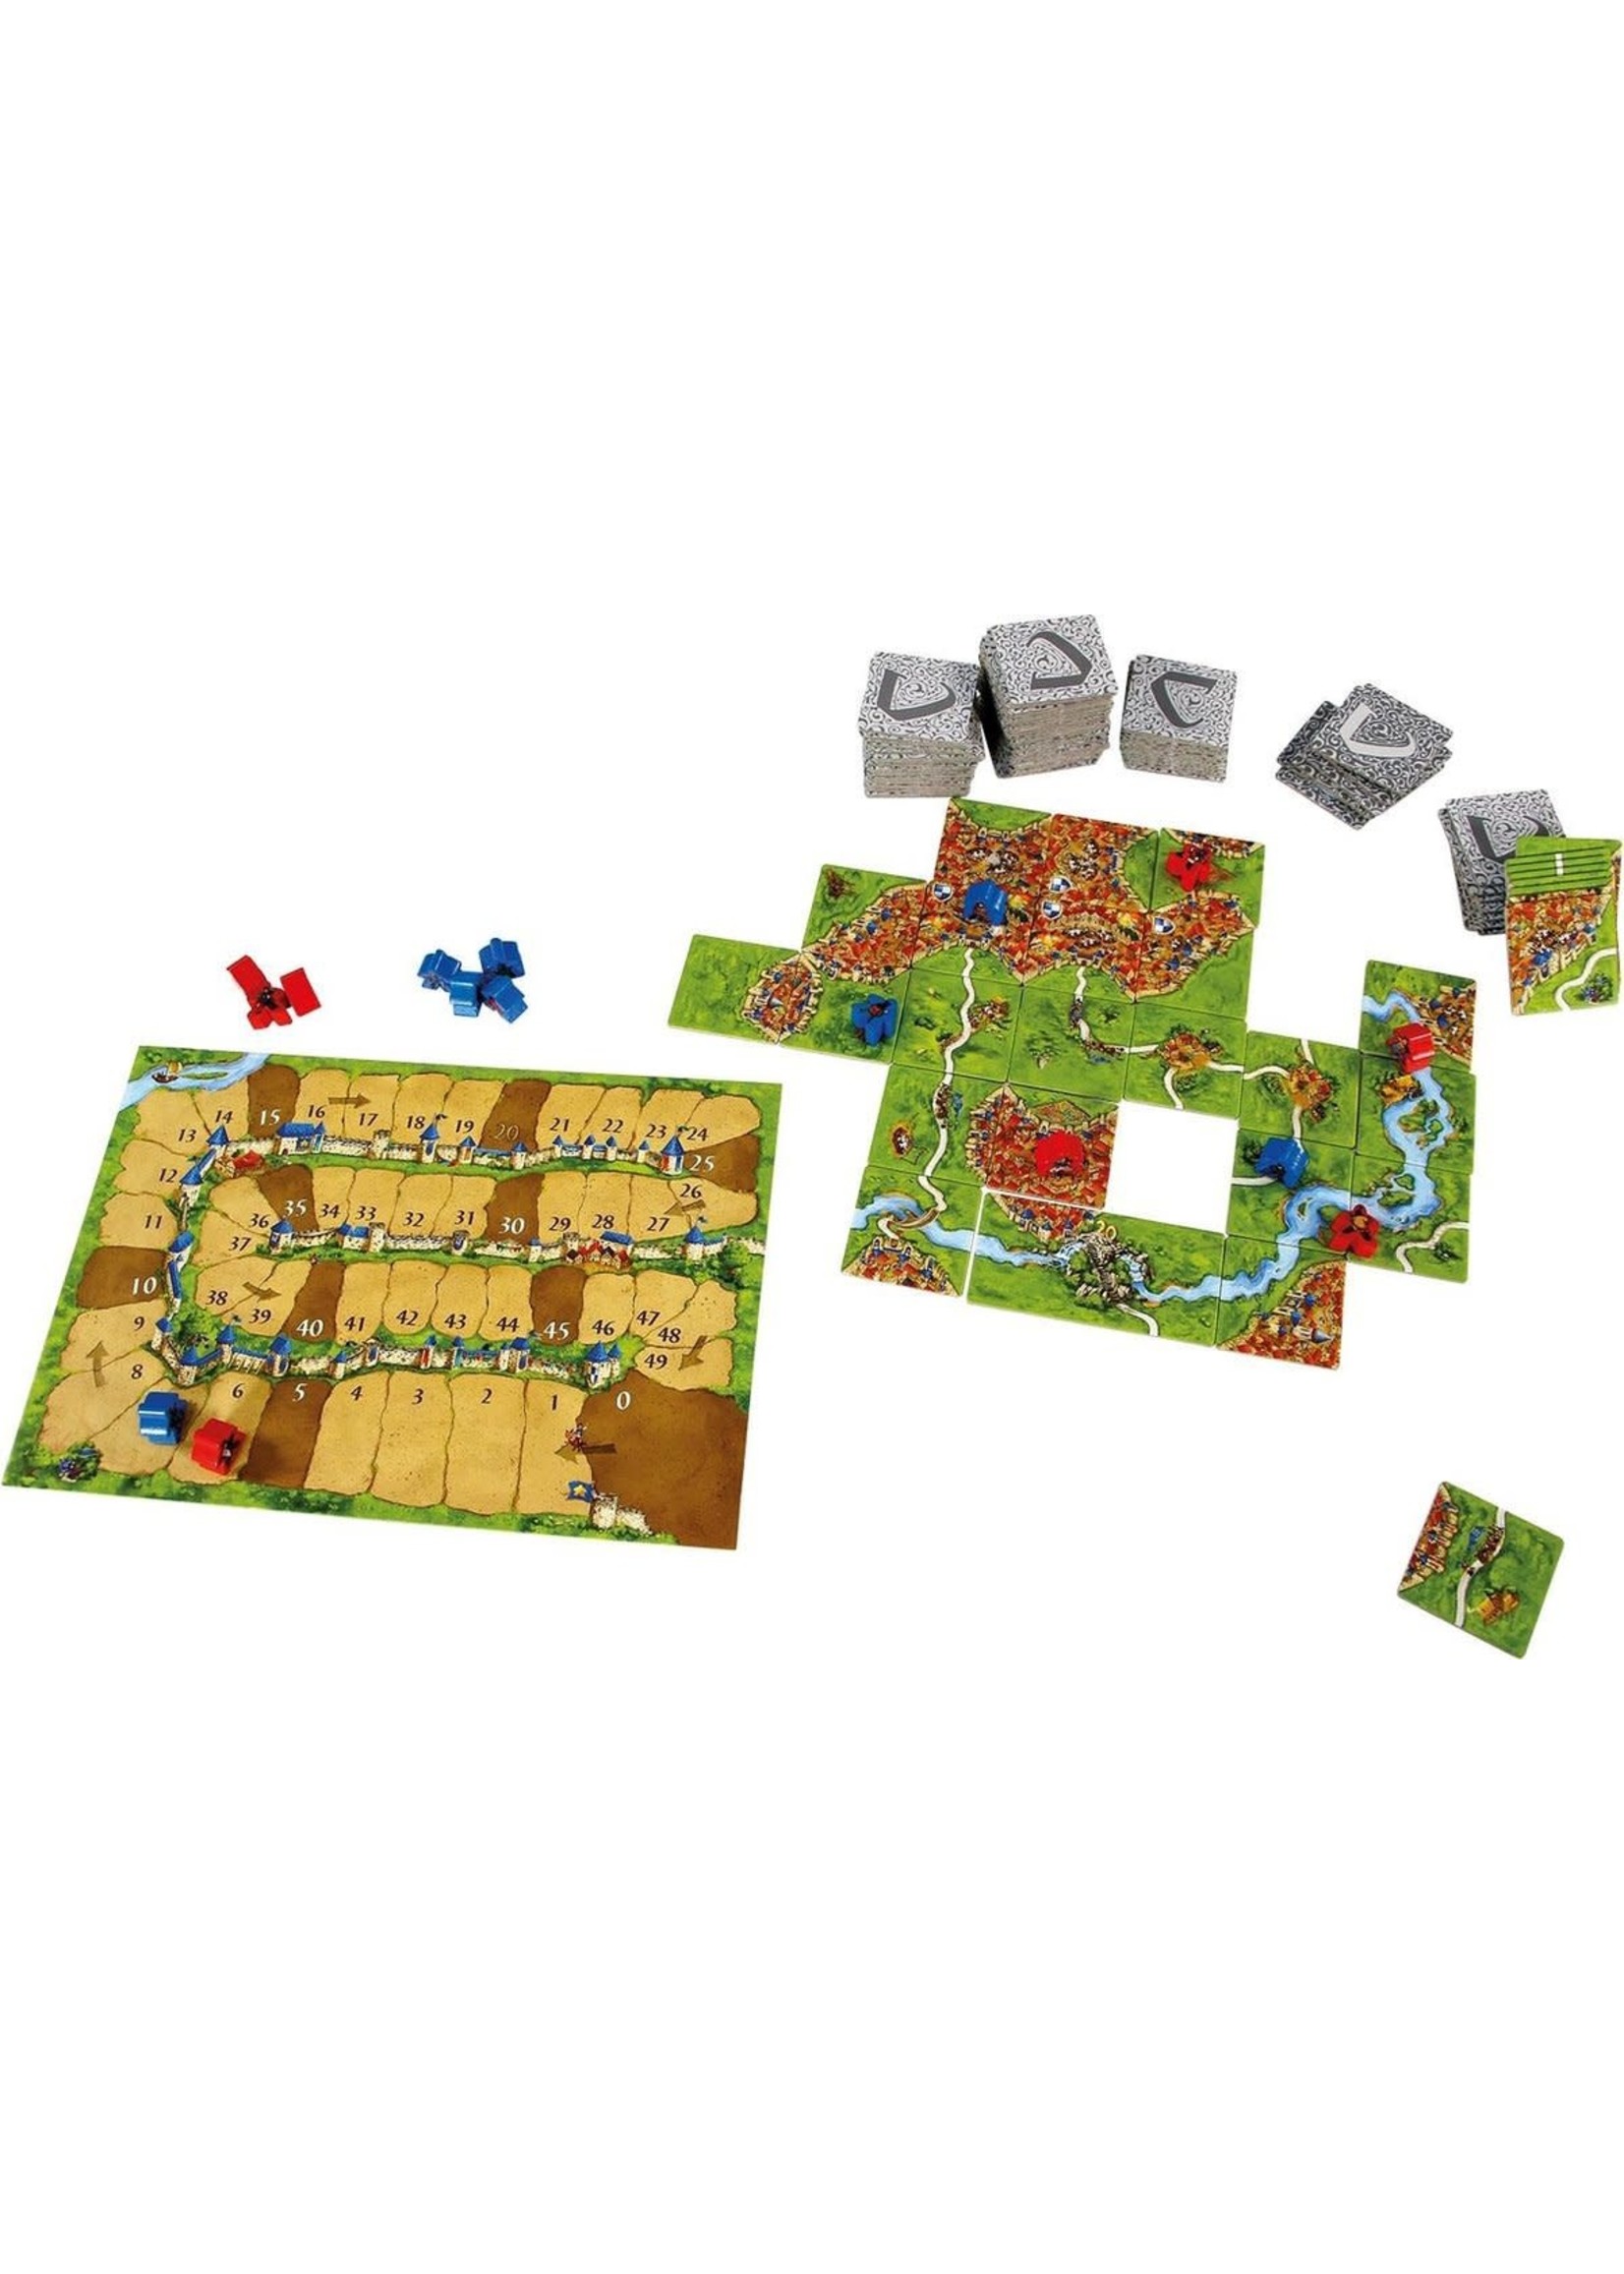 Spel Carcassonne 20 jaar jubileum editie -